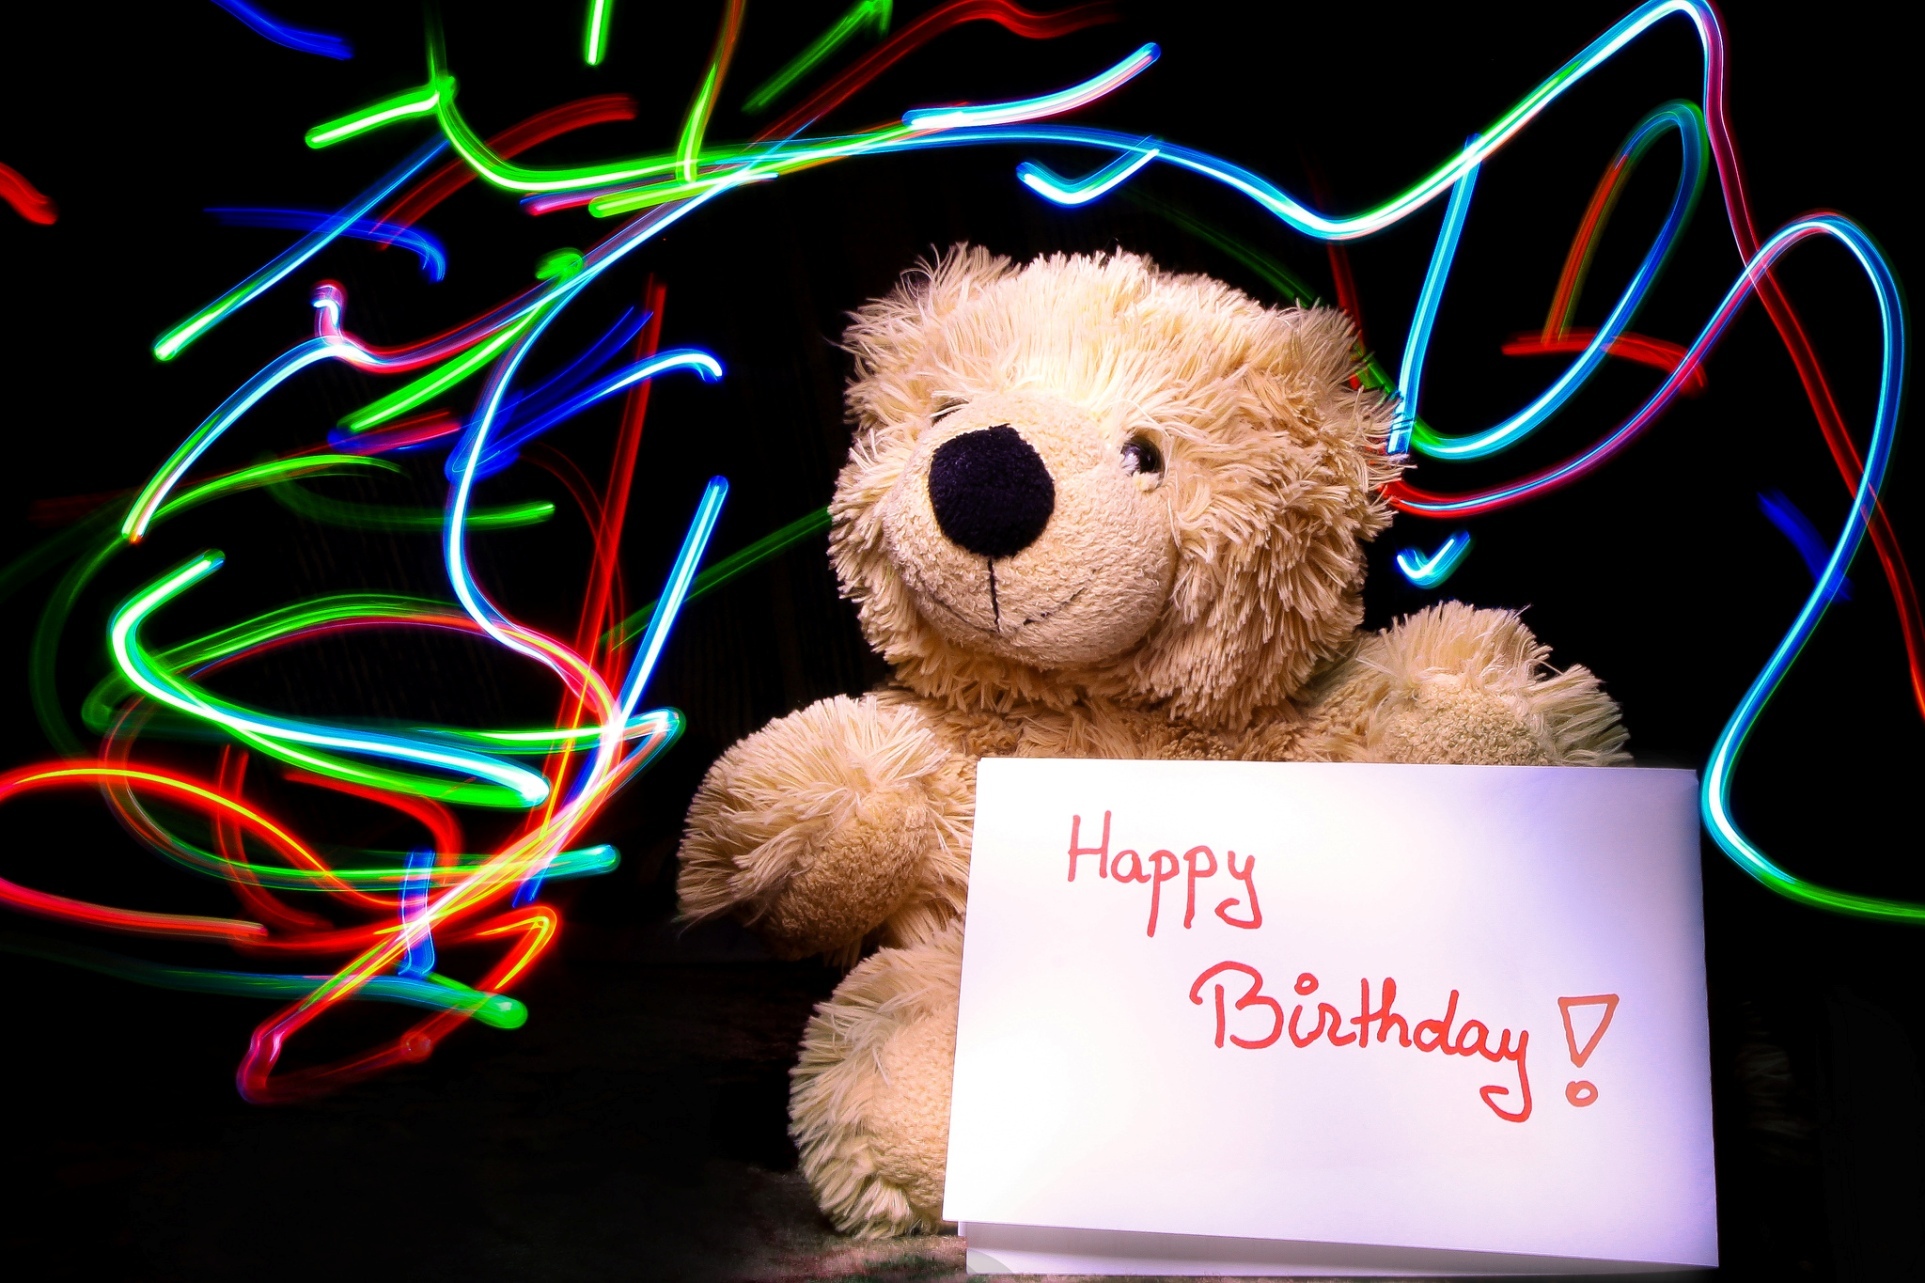 holiday, birthday, happy birthday, stuffed animal, teddy bear, toy